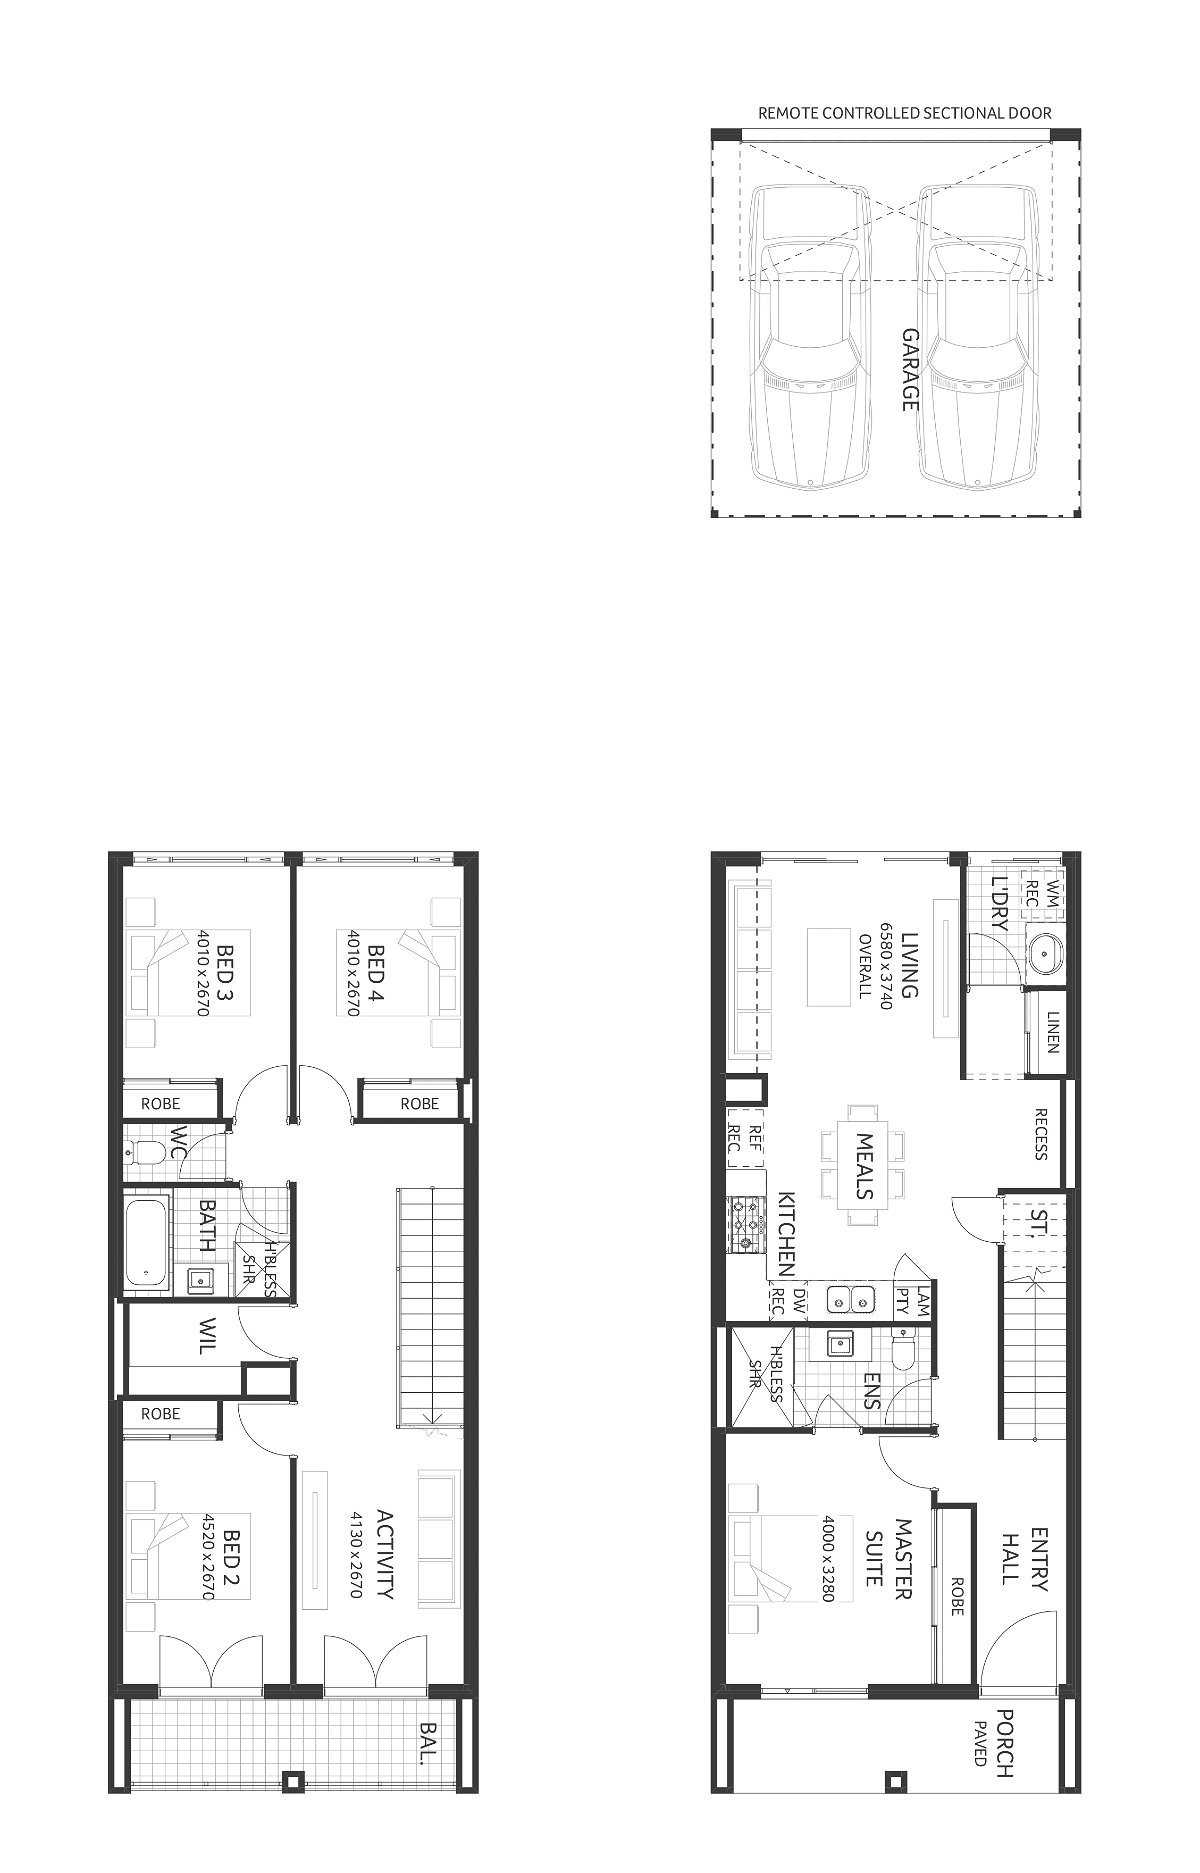 Plunkett Homes - Melrose | Federation - Floorplan - Melrose Luxe Federation Website Floorplan